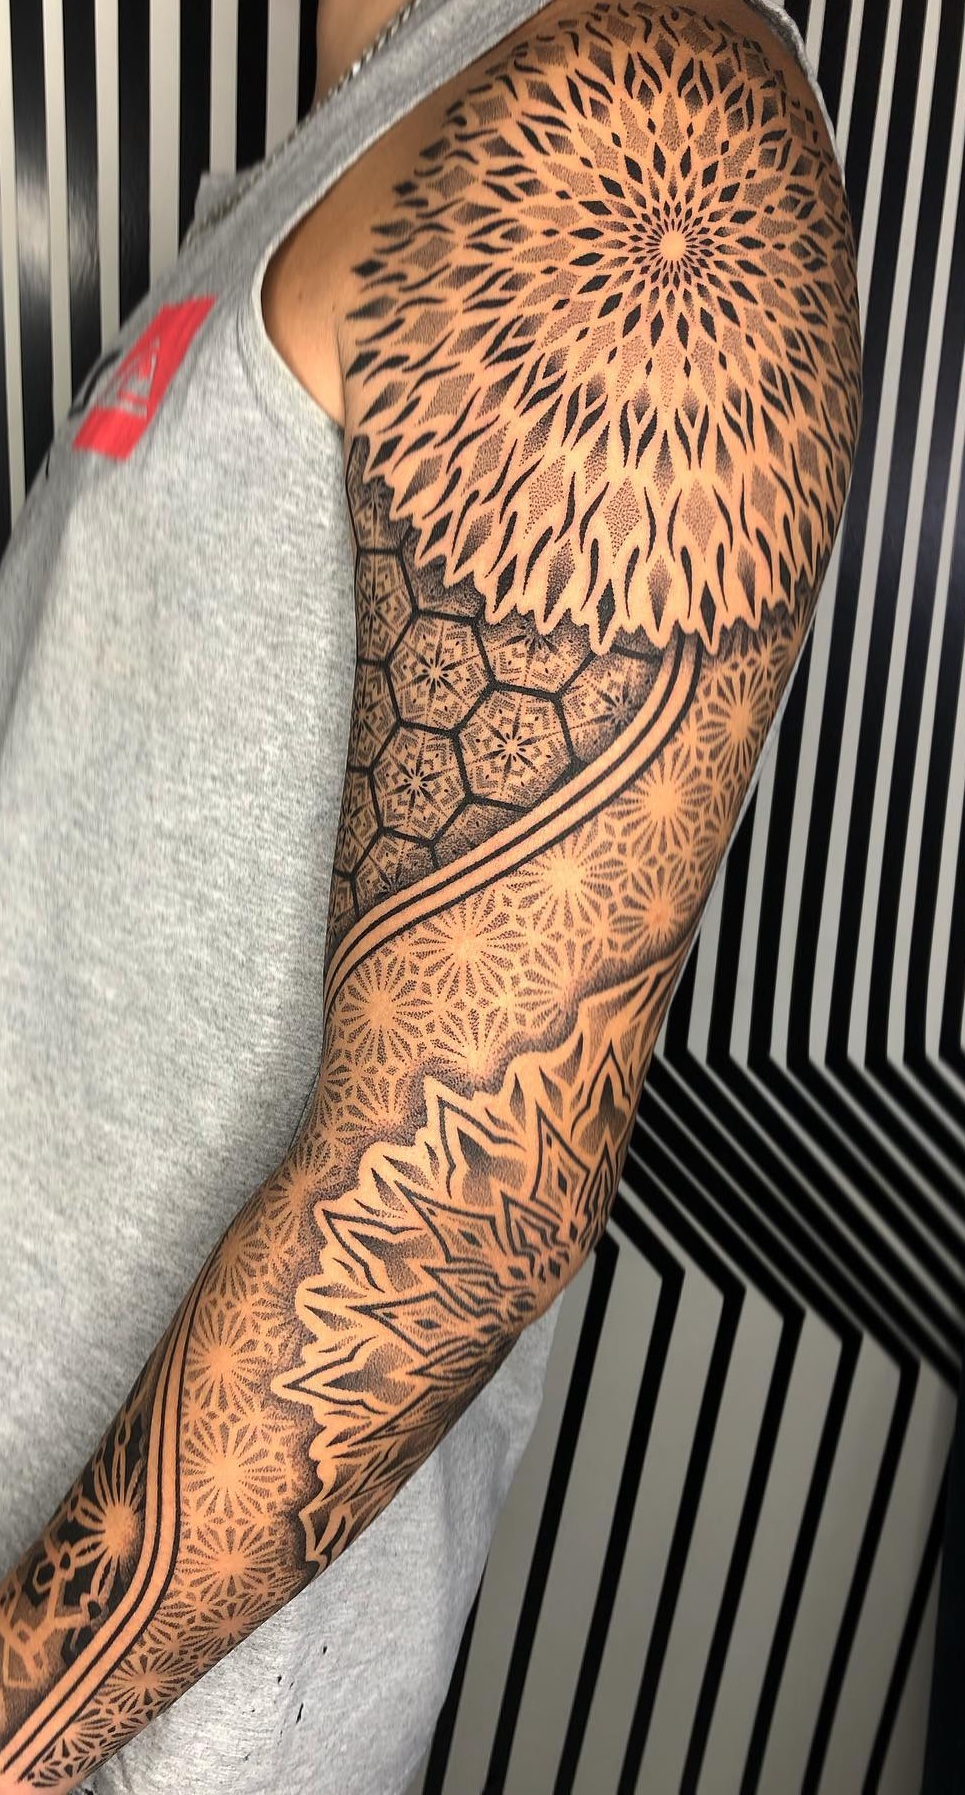 Black&Grey Tattoo Designs: Over 700 Creative Tattoo Ideas to Inspire Your  Next Bit of Body Art. Original, Modern Black and Grey Tattoo Designs for  Women and Men: Publishing, Tattoo Designs: 9798351608648: Amazon.com: